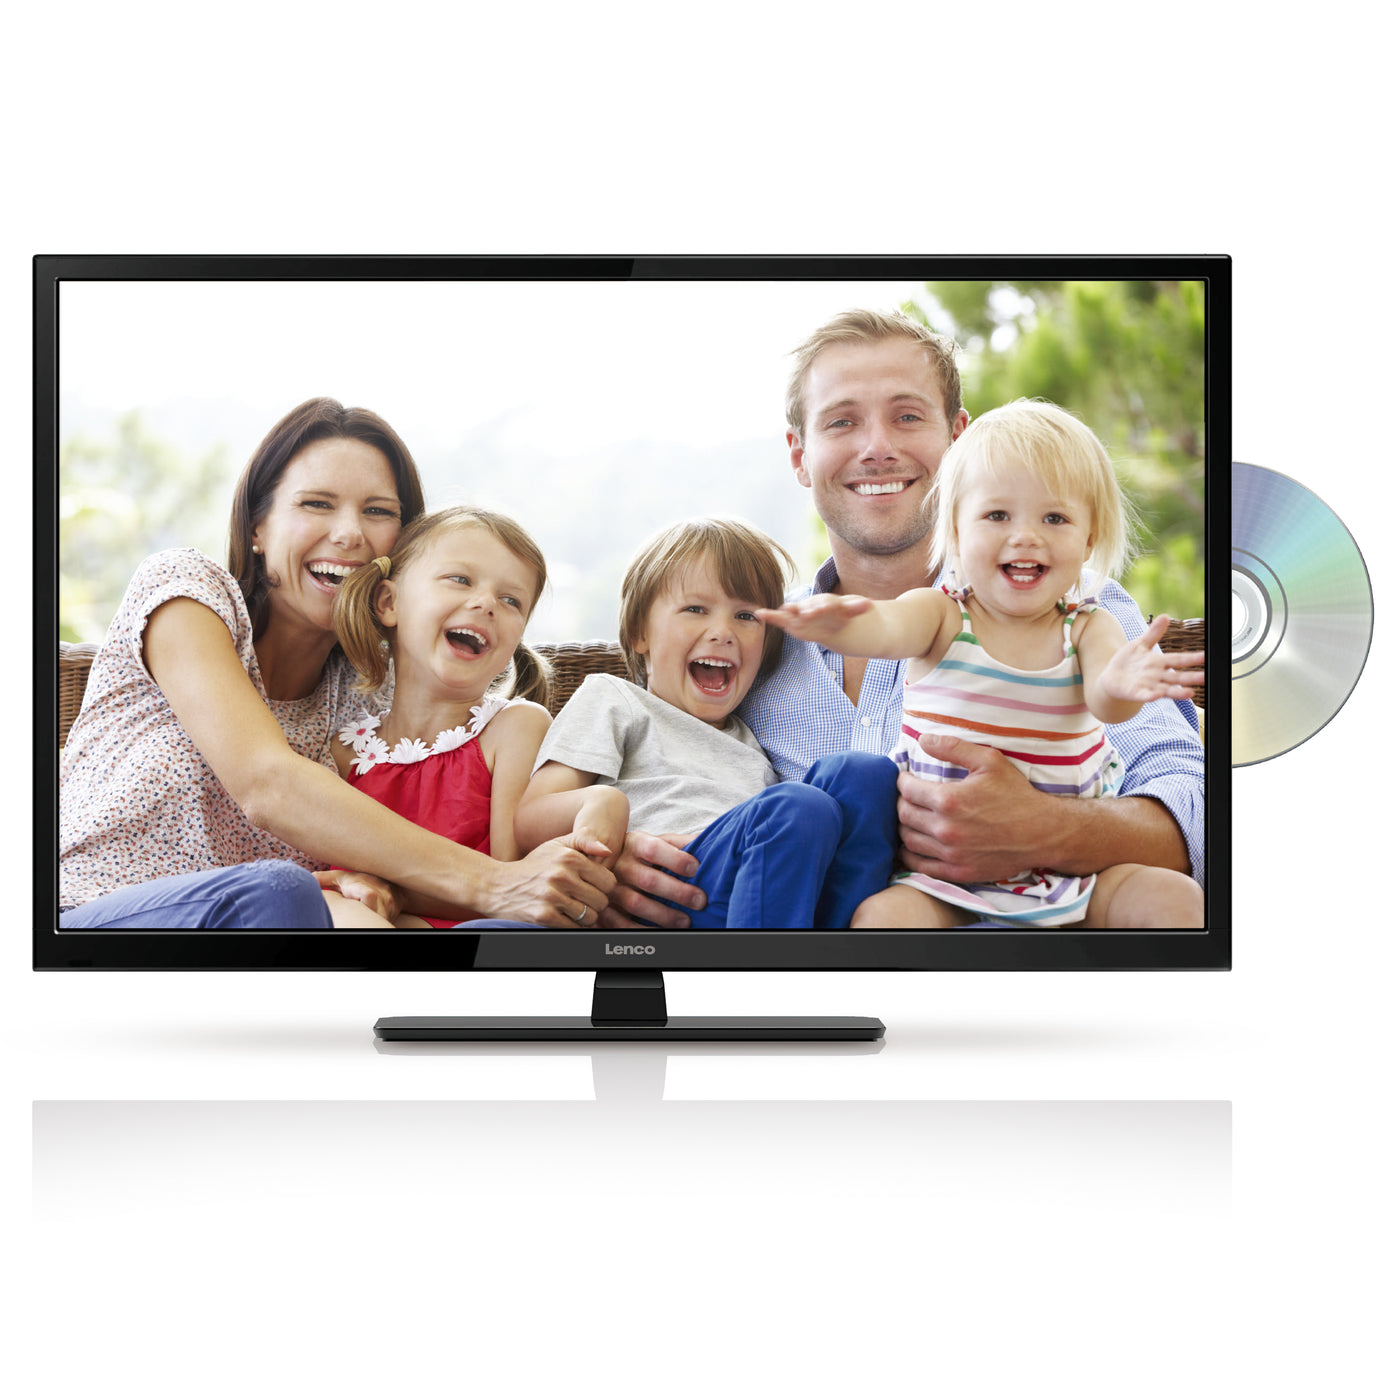 LENCO DVL-2862 - Telewizor LED HD 28 cali i DVB/T/T2/S2/C ze zintegrowanym odtwarzaczem DVD - Czarny